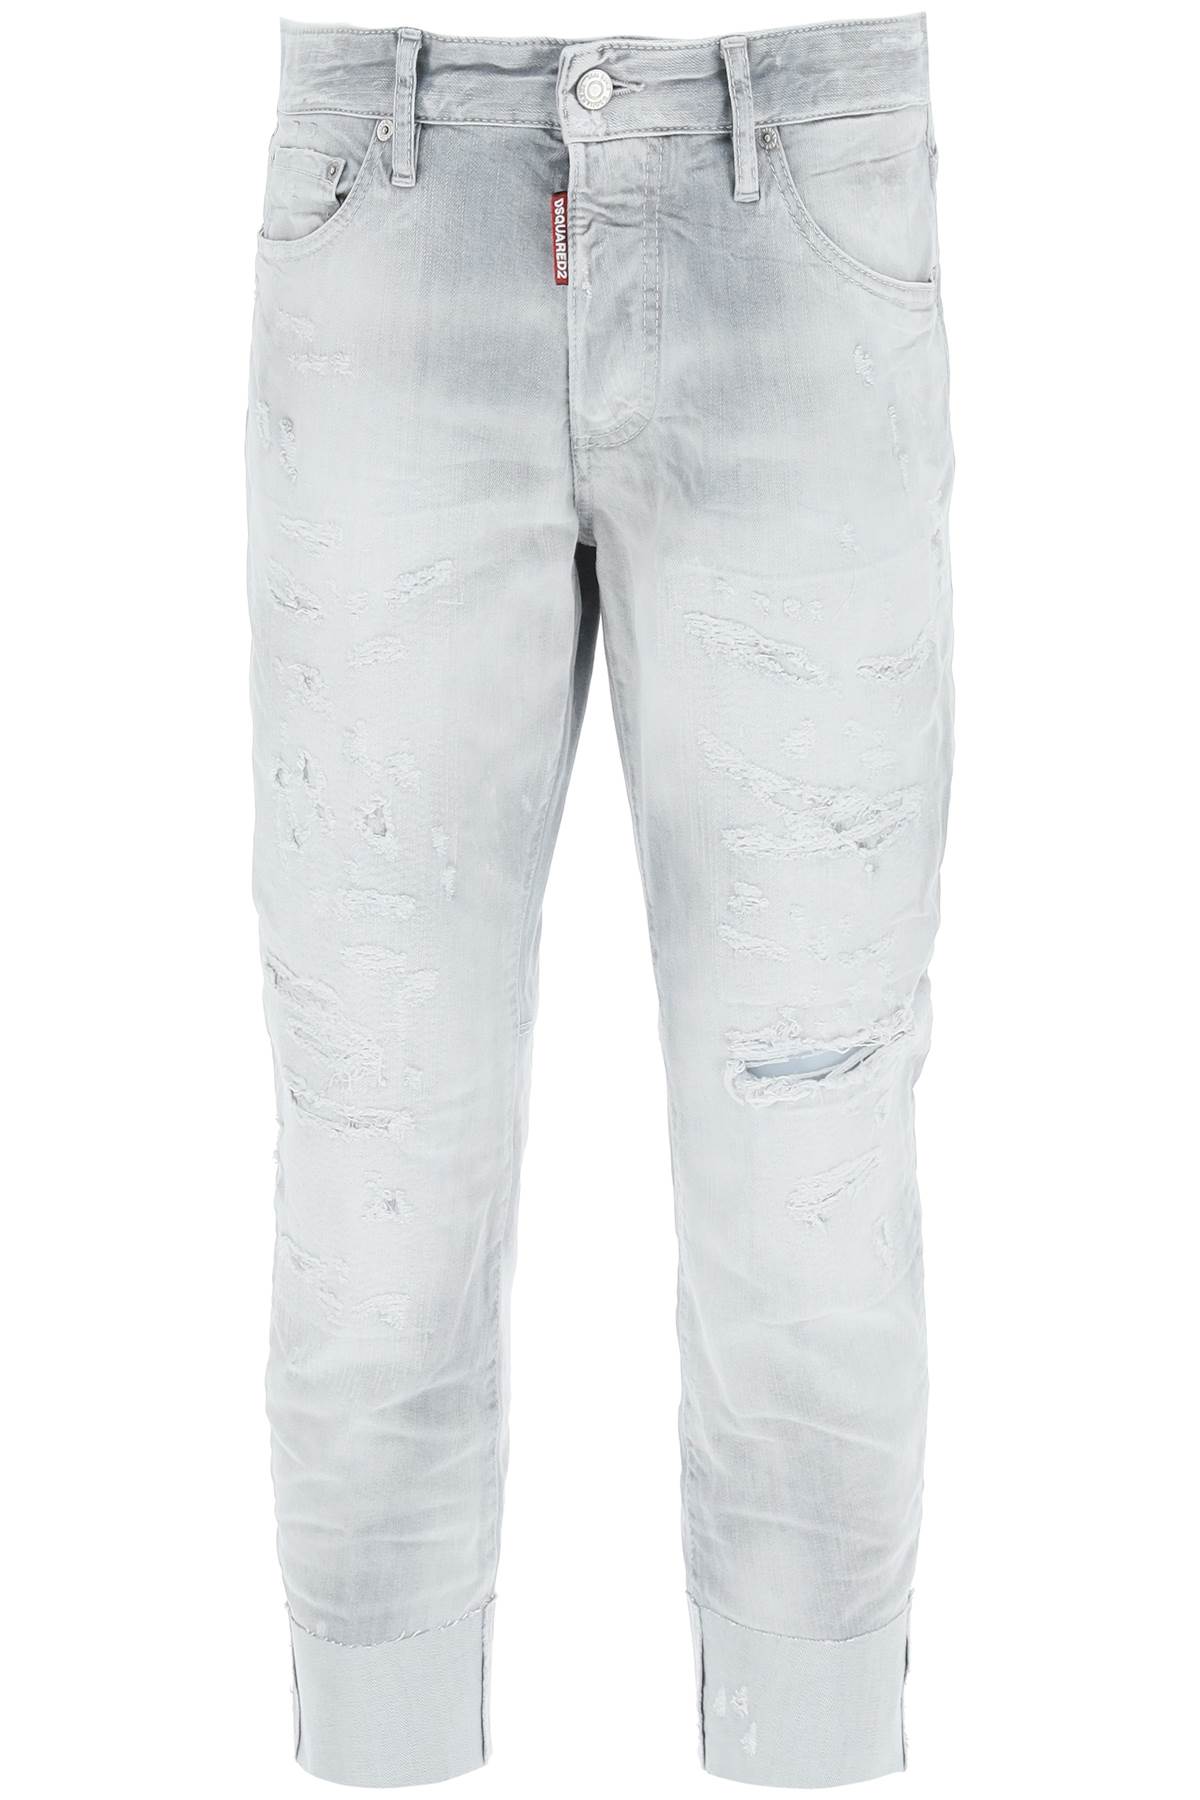 Dsquared2 Piranha Grey Denim Wash Sailor Jeans